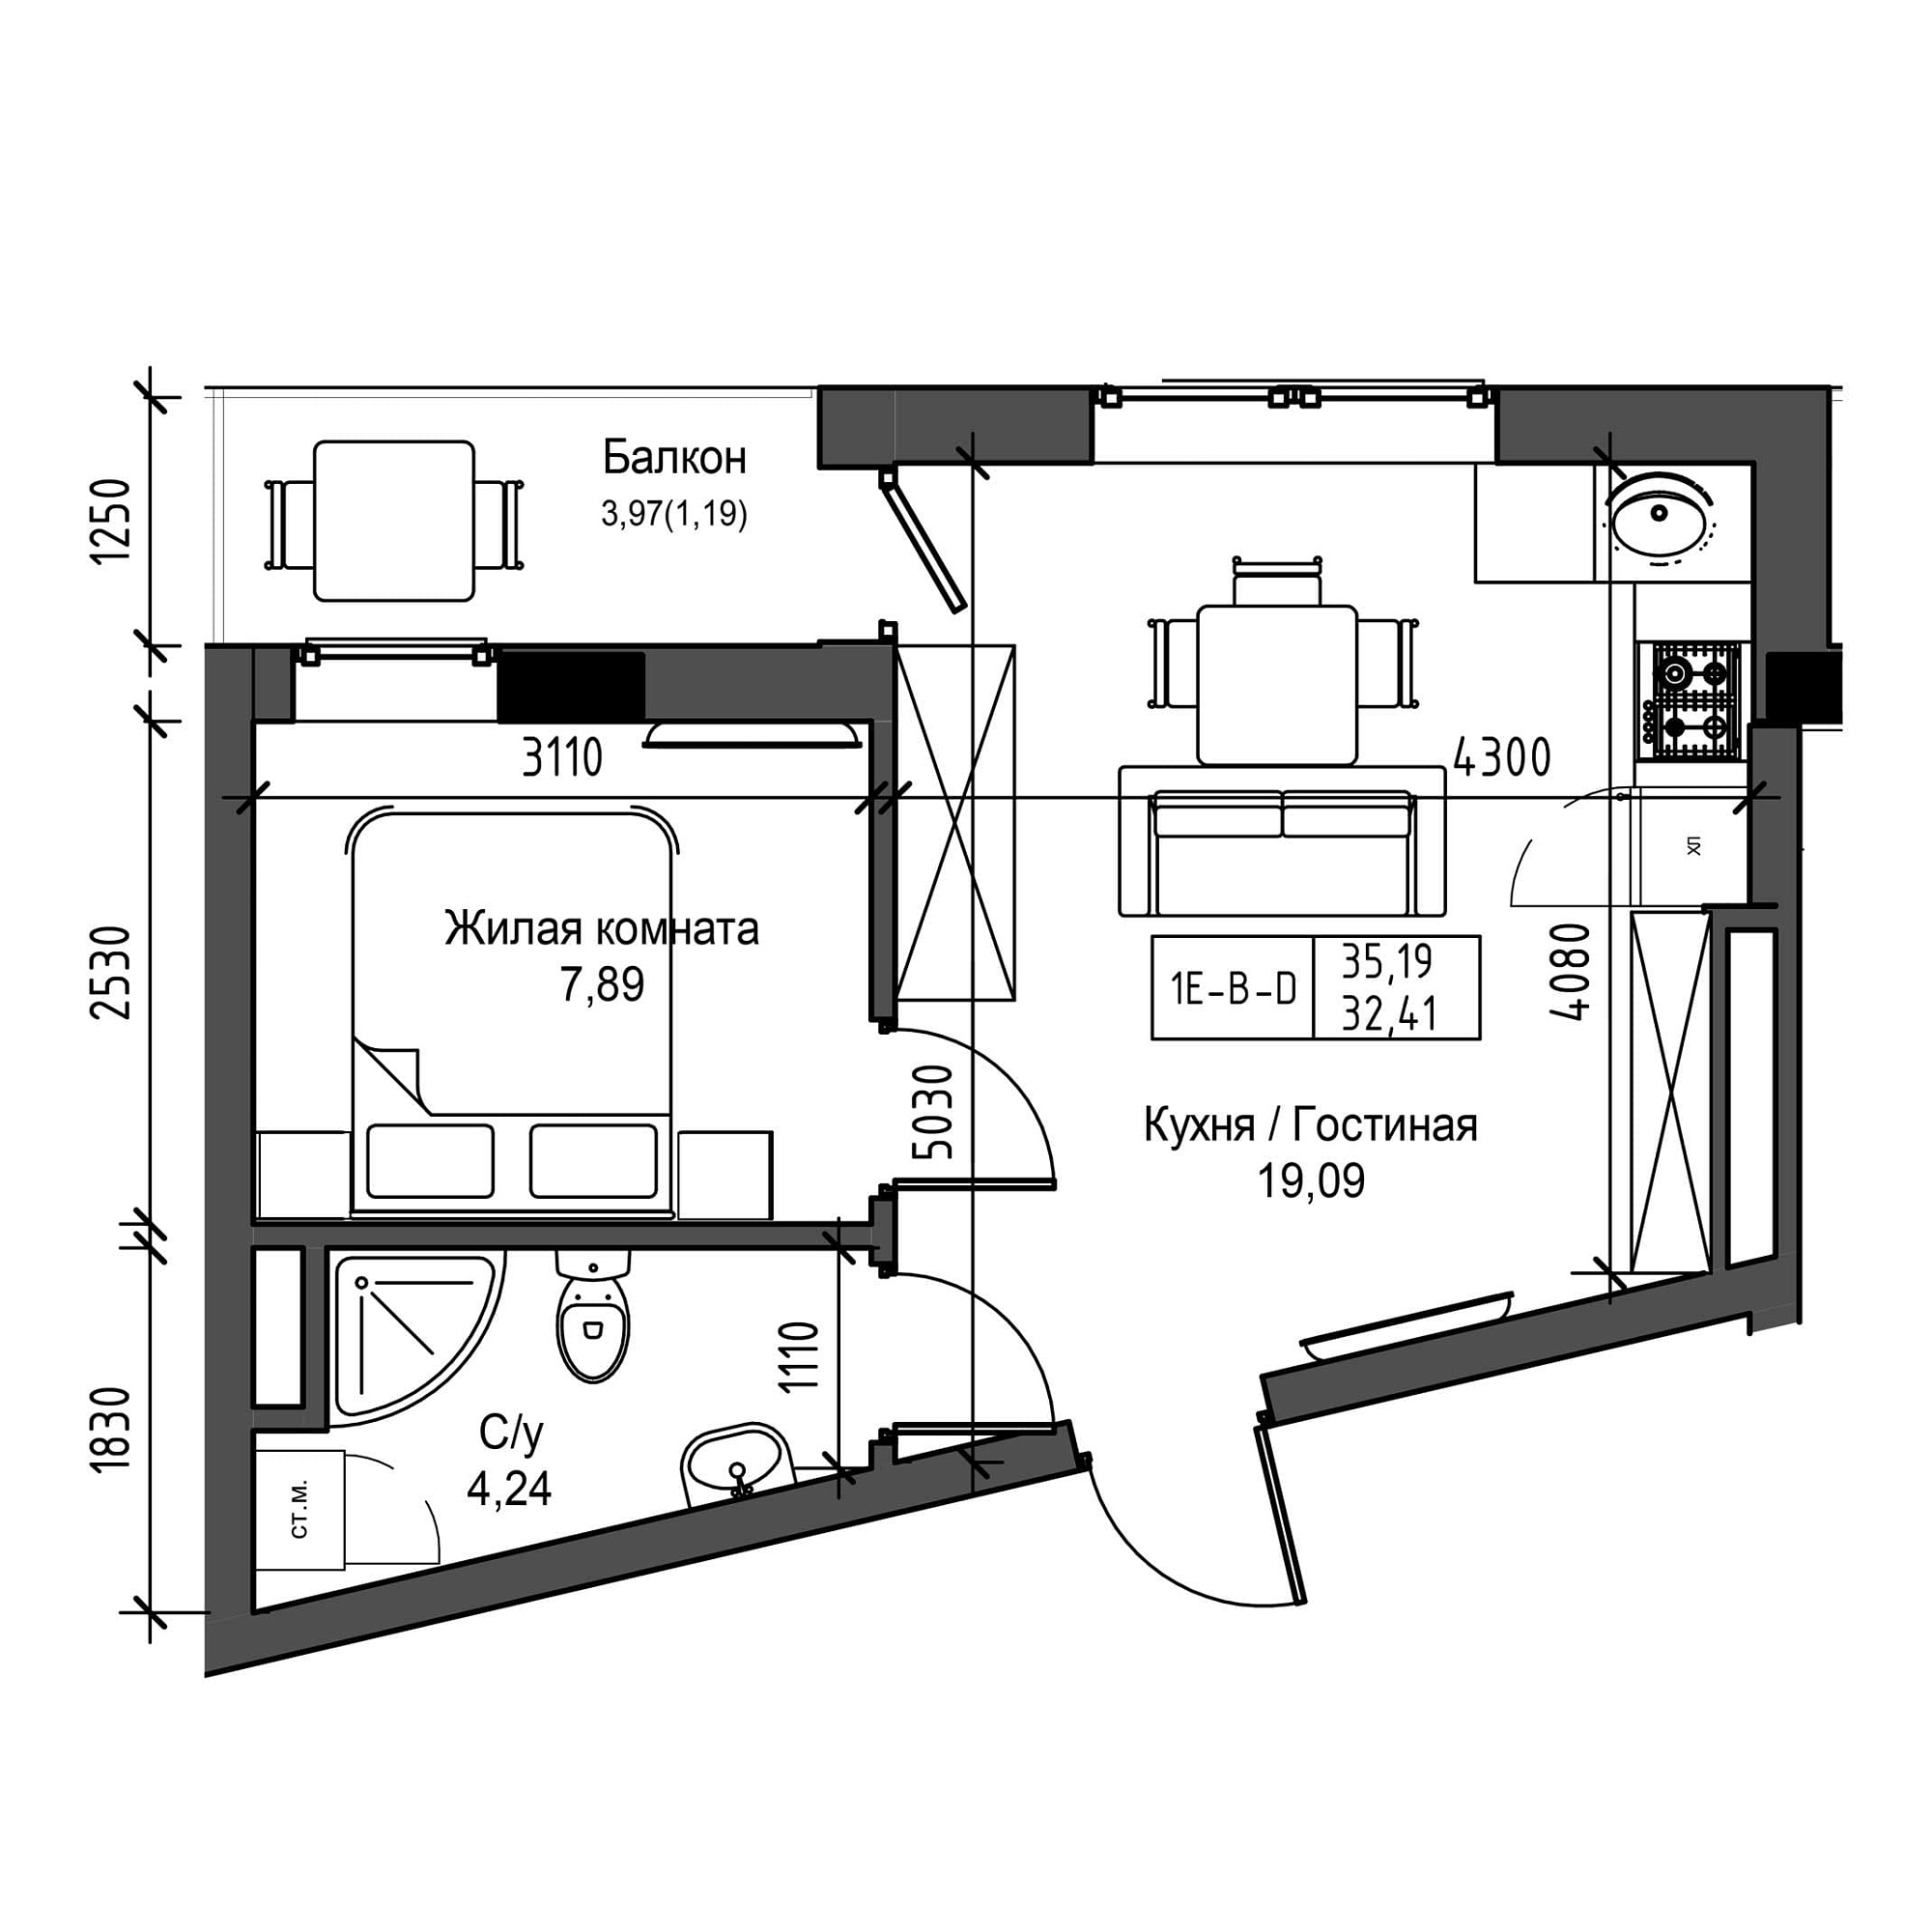 Планування 1-к квартира площею 32.41м2, UM-001-05/0005.